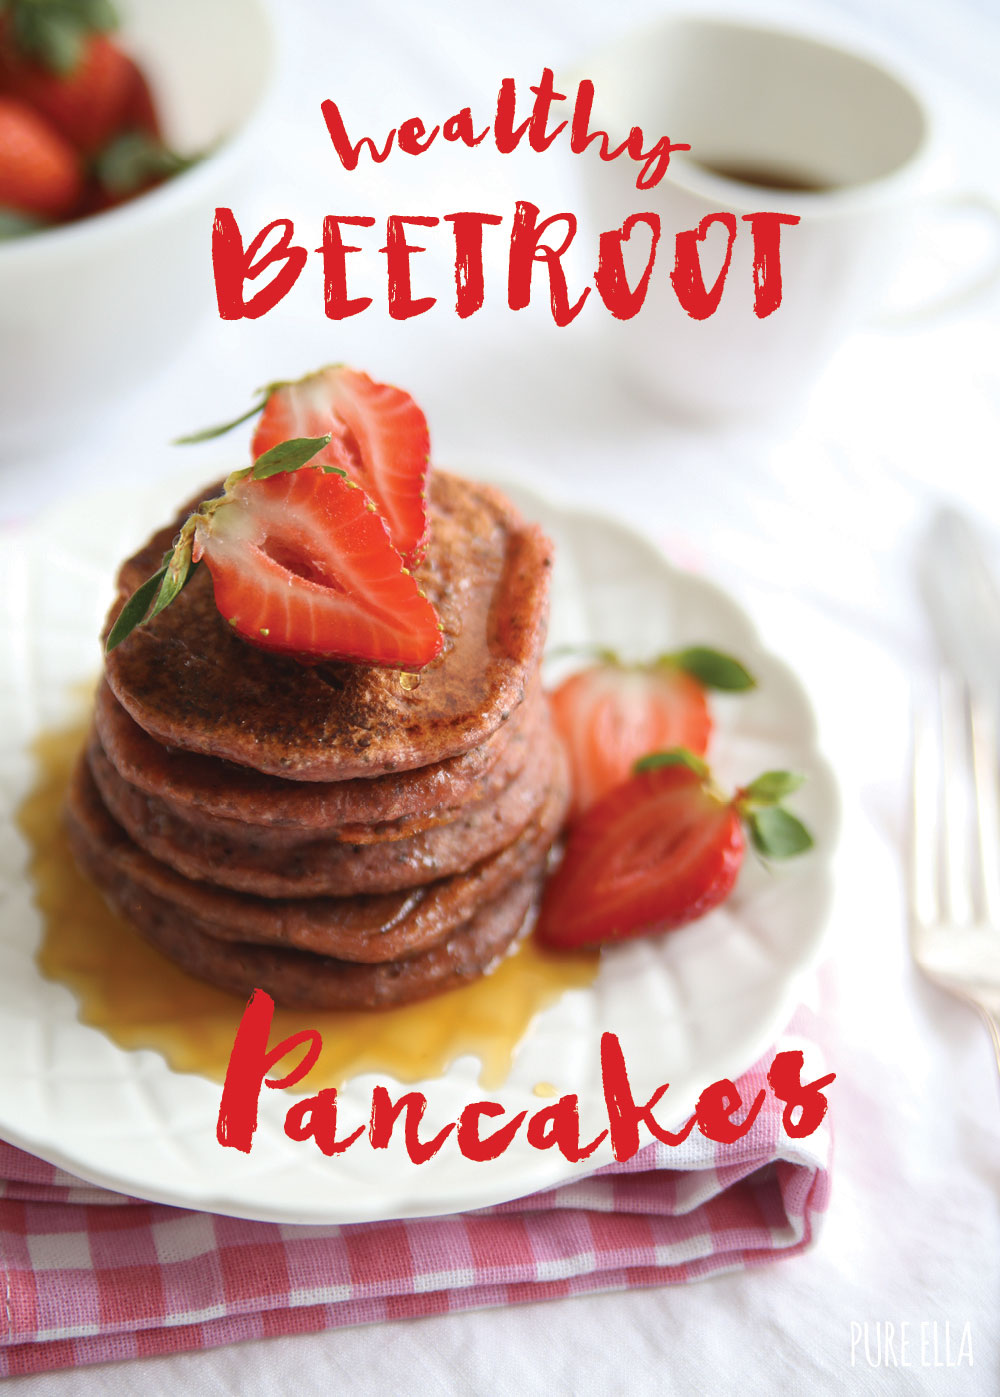 Pure-Ella-Healthy-Beetroot-Pancakes-gluten-free-vegan